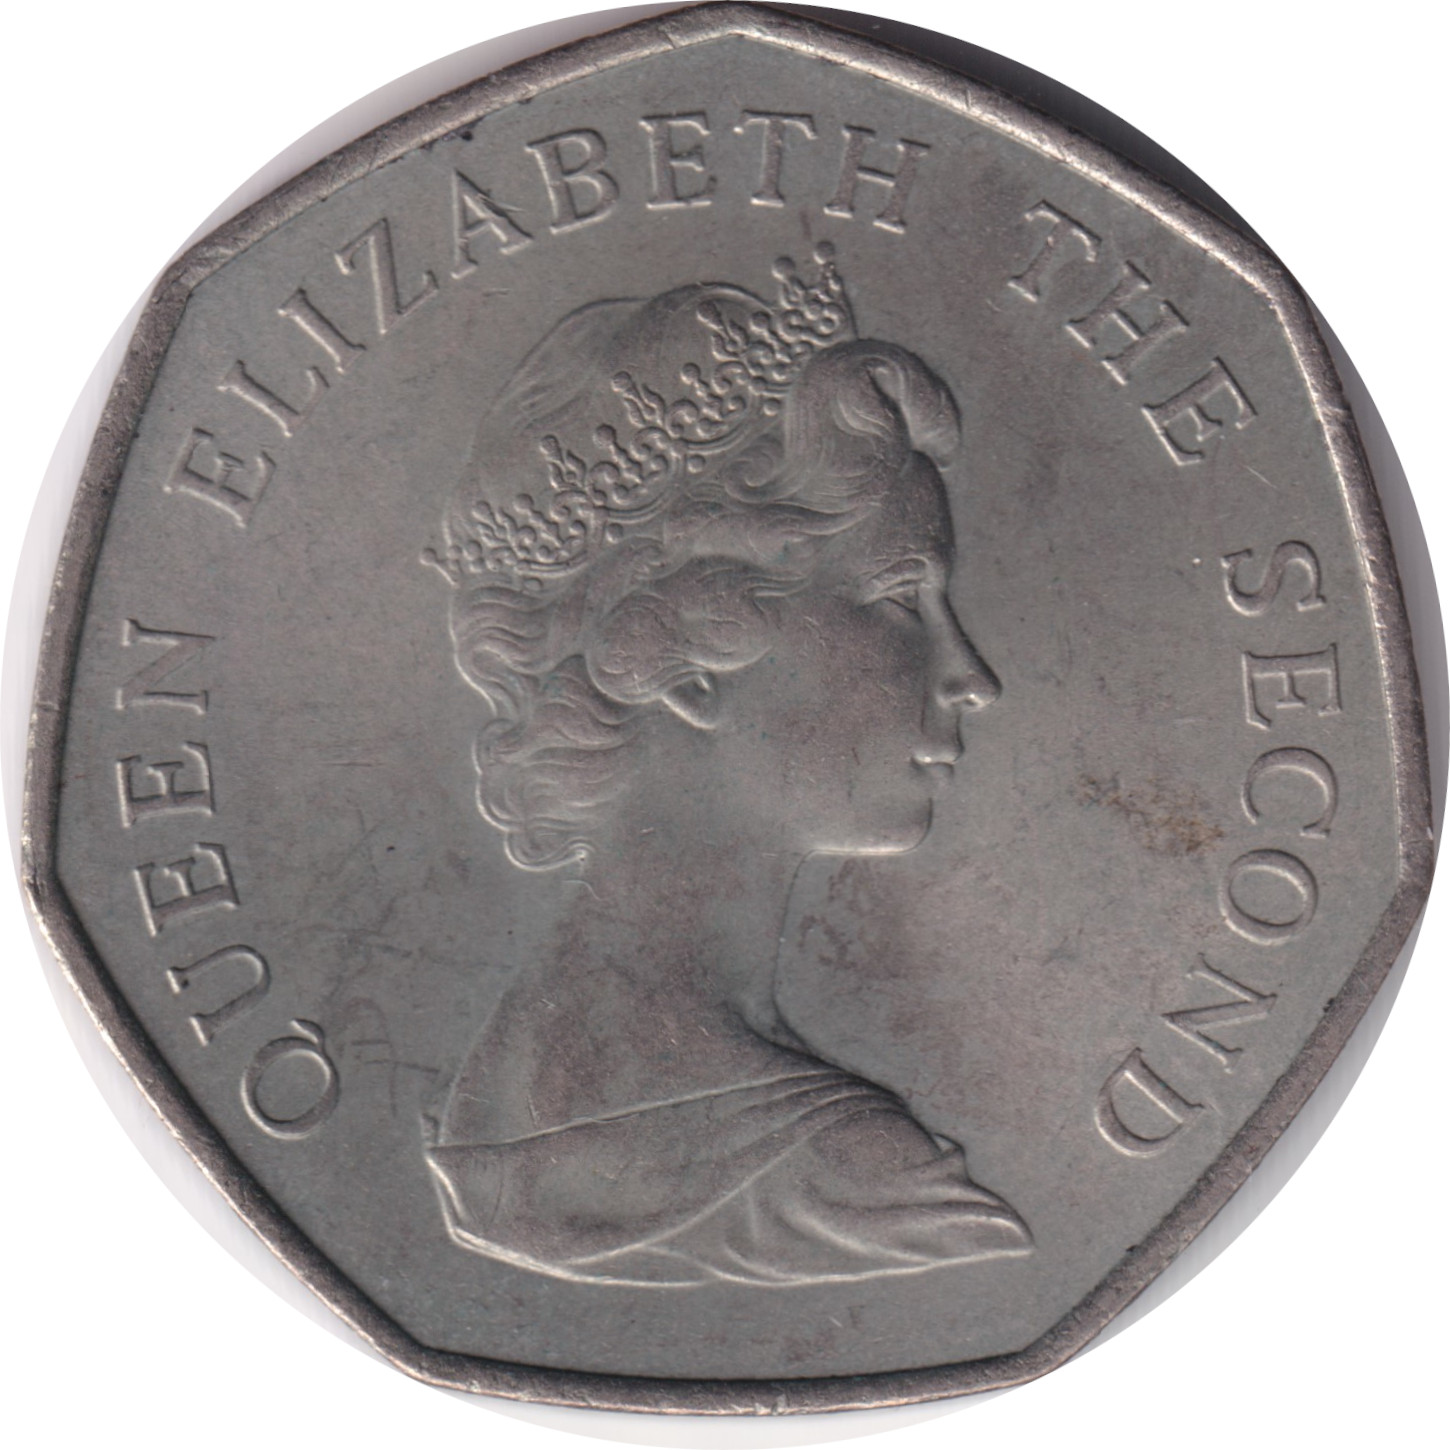 50 pence - Elizabeth II - Buste jeune - New pence